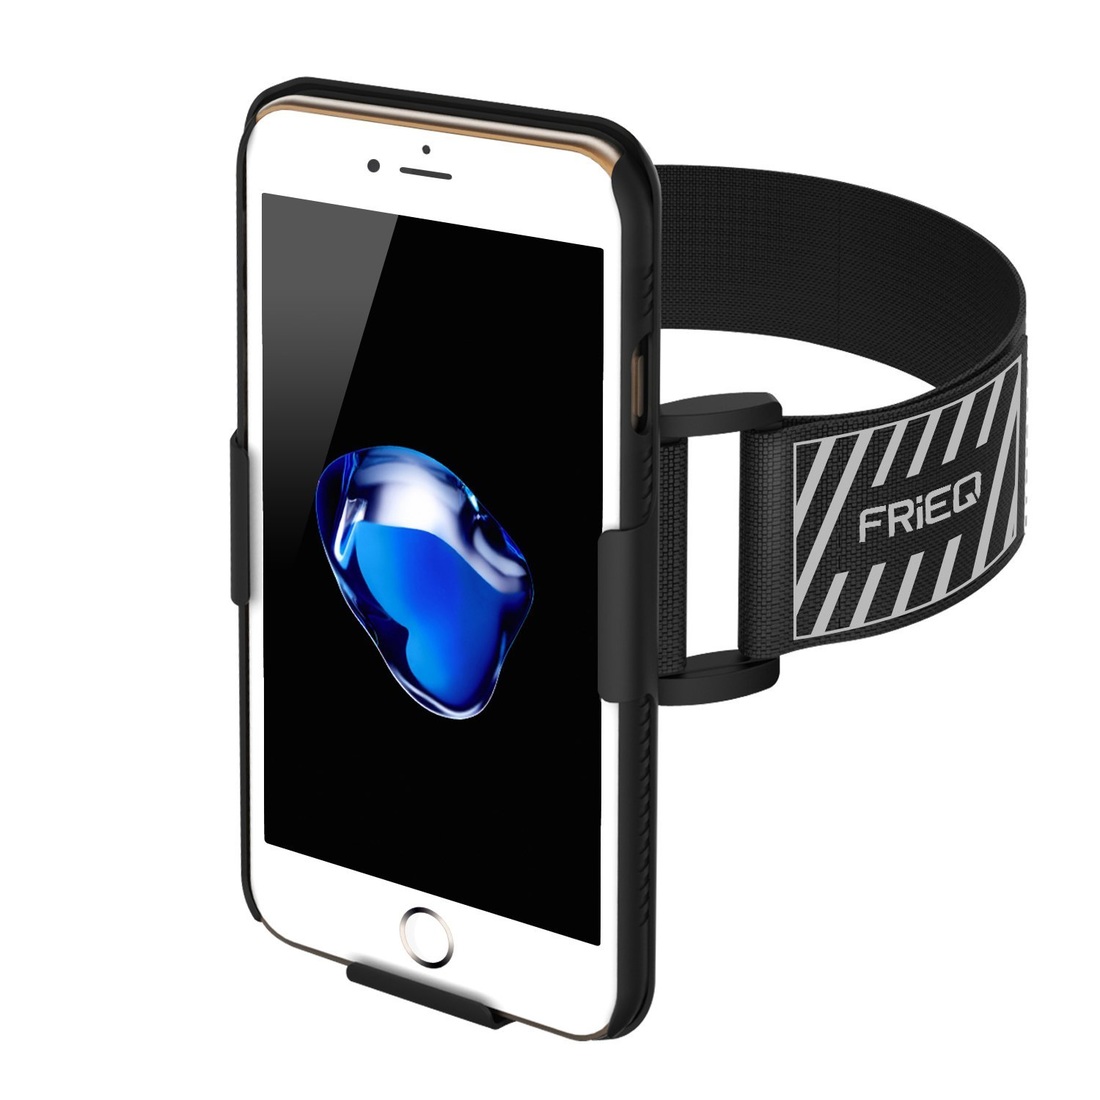 Top 5 Best Sweatproof Sports Armband For iPhone 7 - iGuide 4U